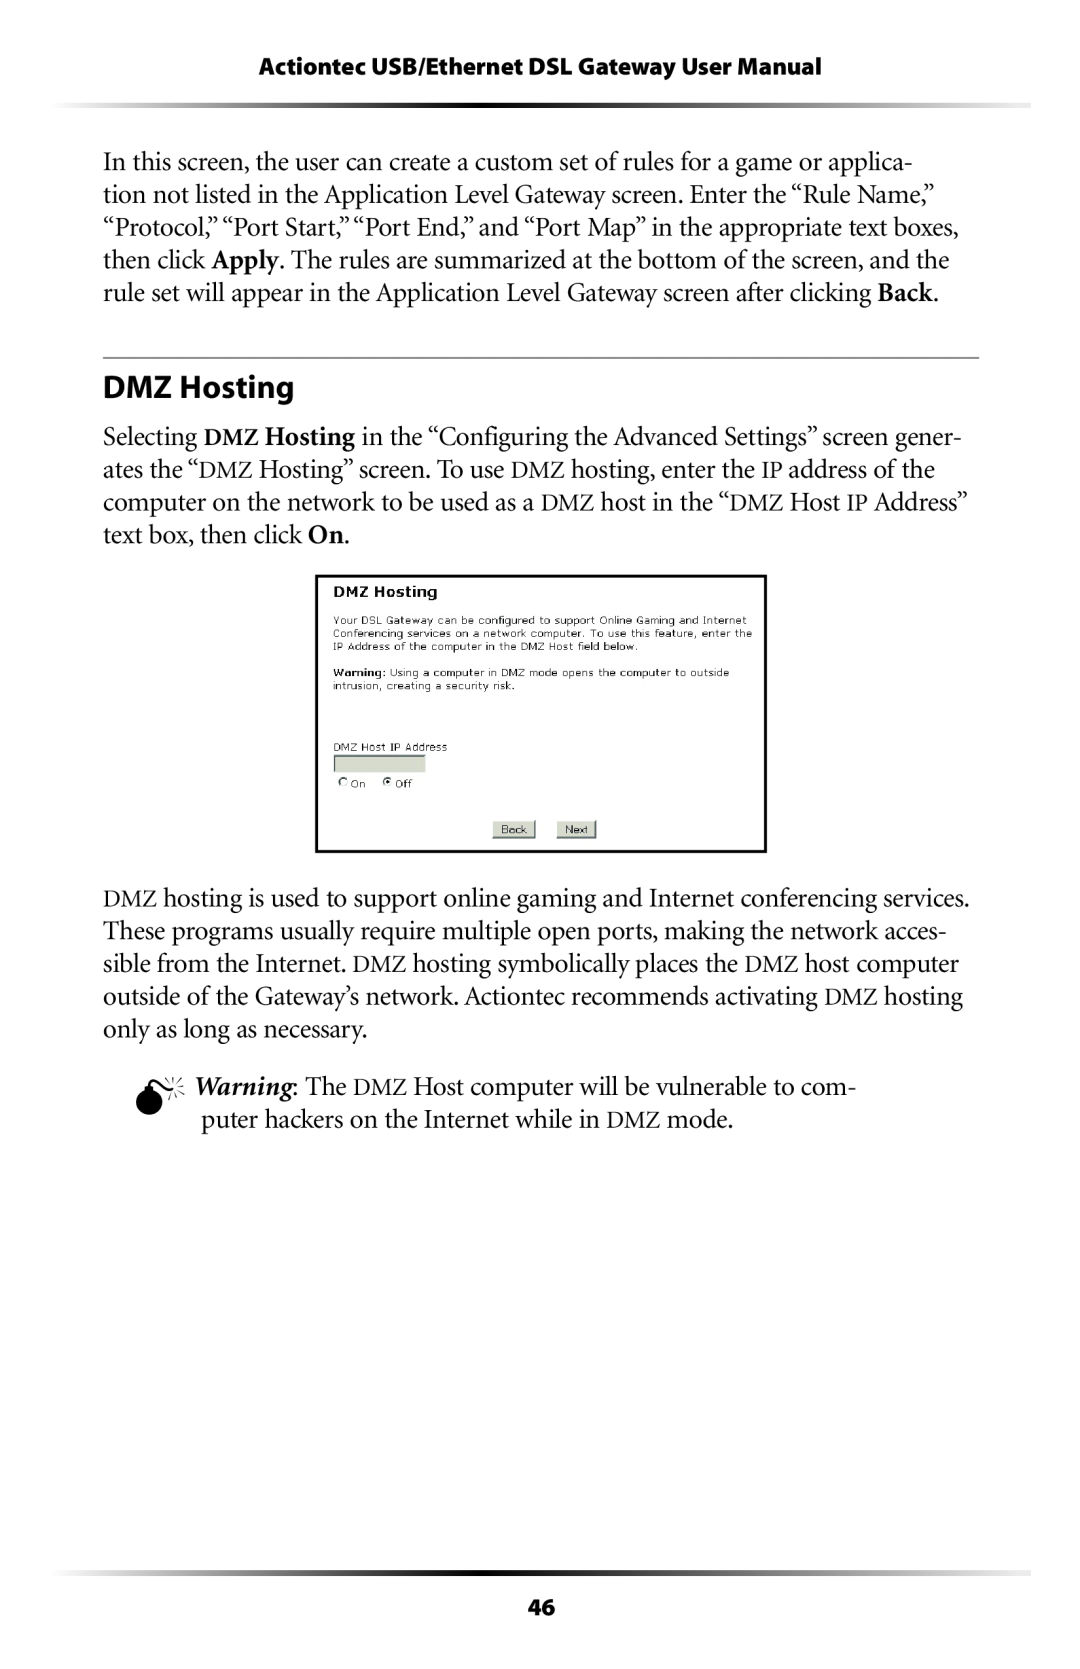 Gateway GT704 user manual DMZ Hosting 